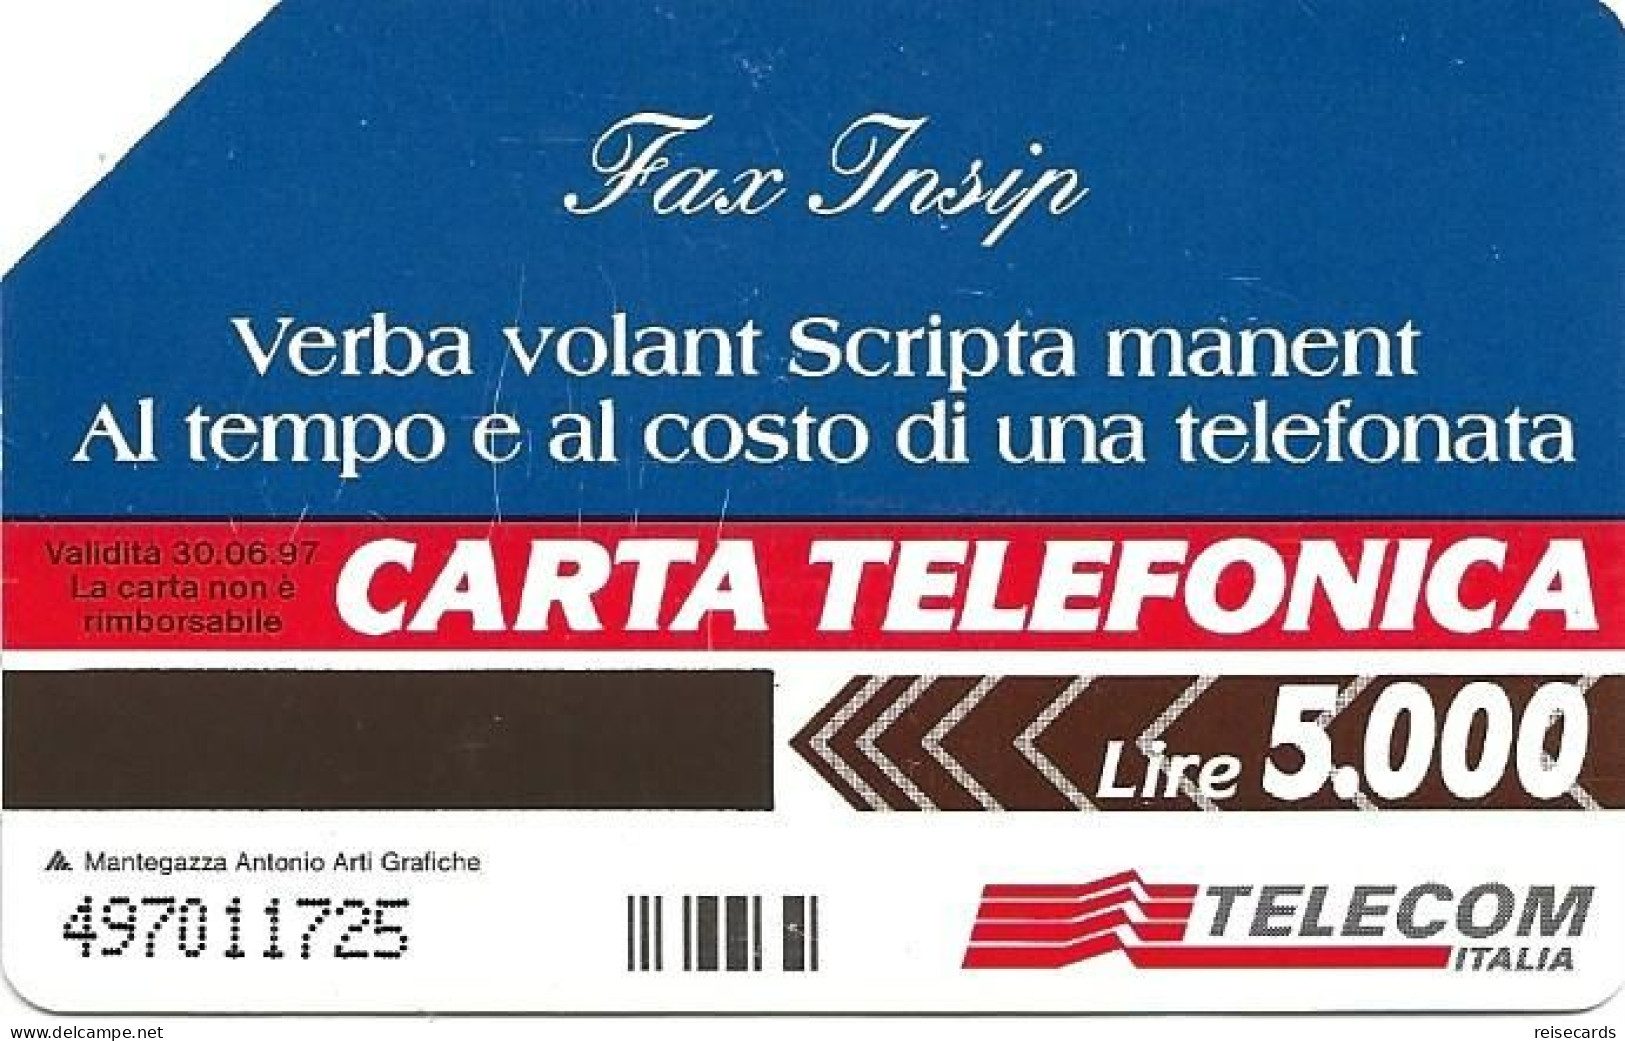 Italy: Telecom Italia - Fax Insip - Publiques Publicitaires